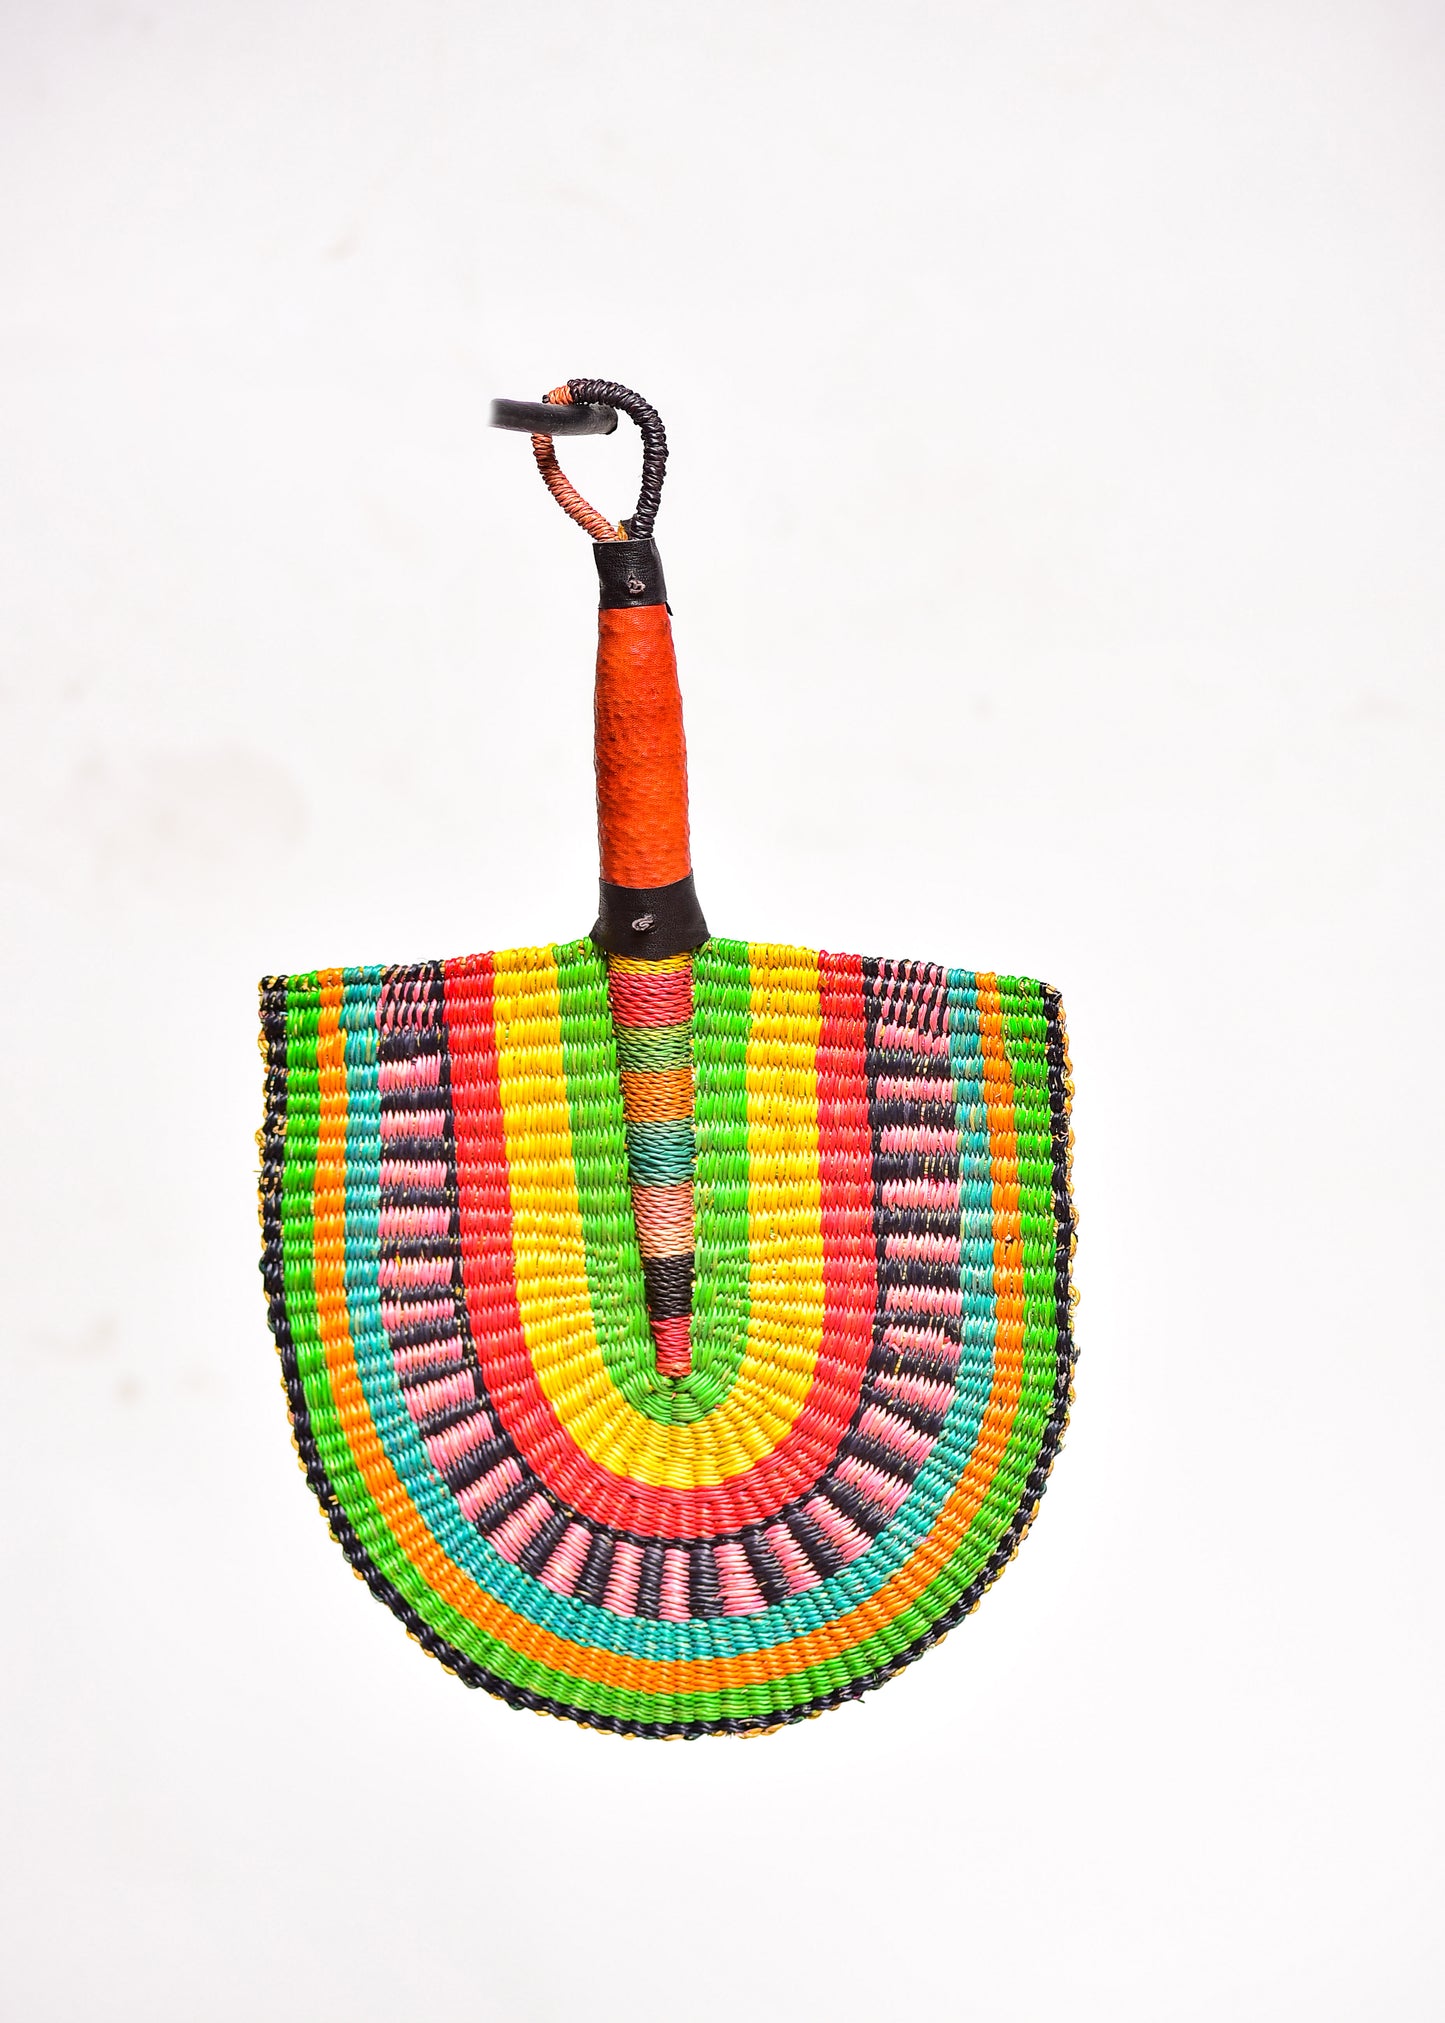 Agwe Straw Woven Handfan(Leather Based Handle)